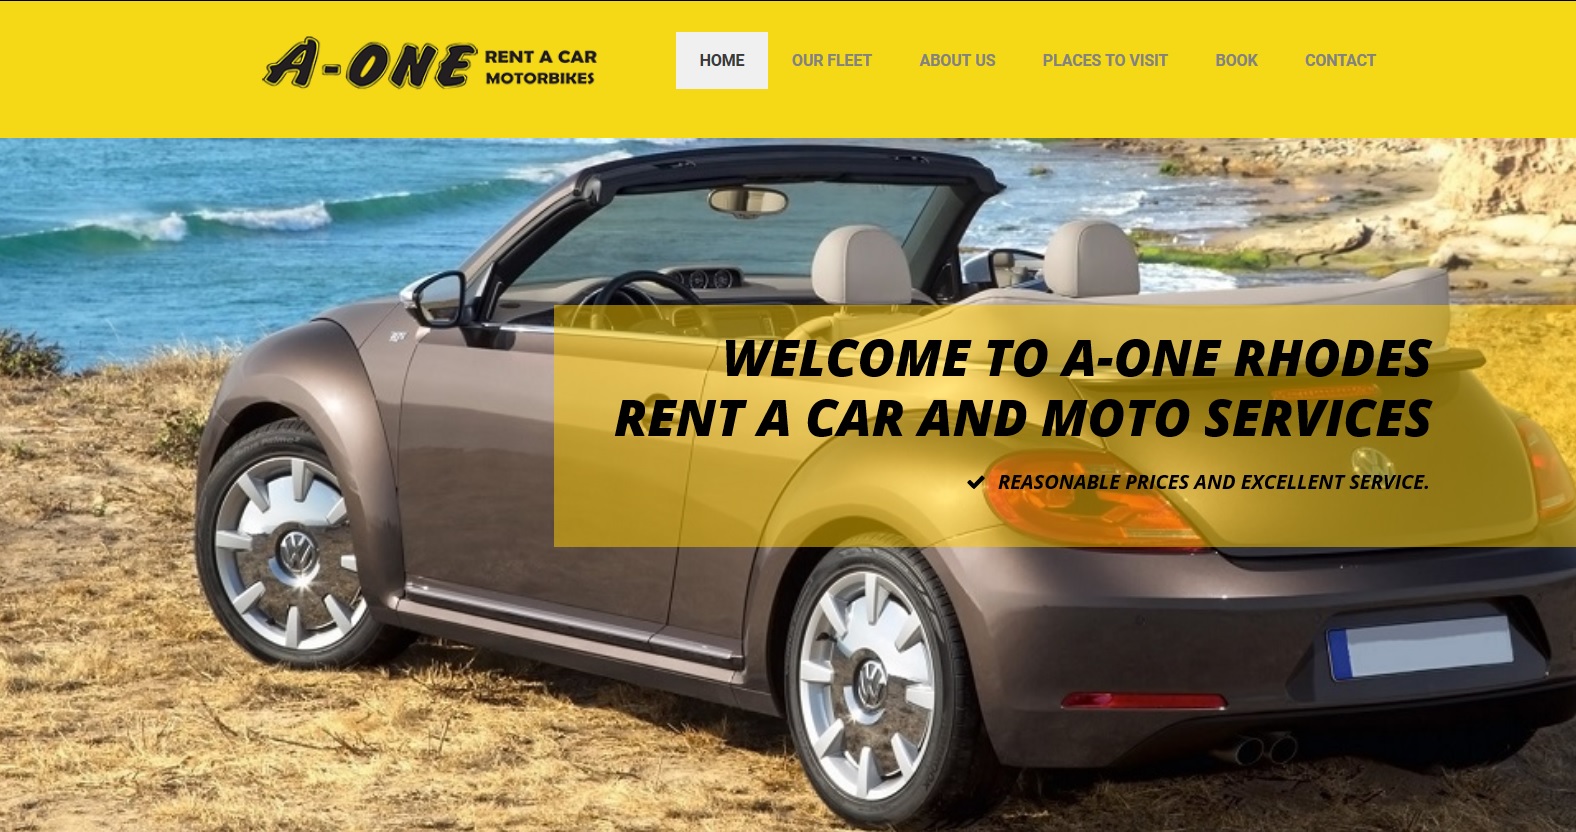 Fiat Doblo (7 seater) – Skyros Rent A Car